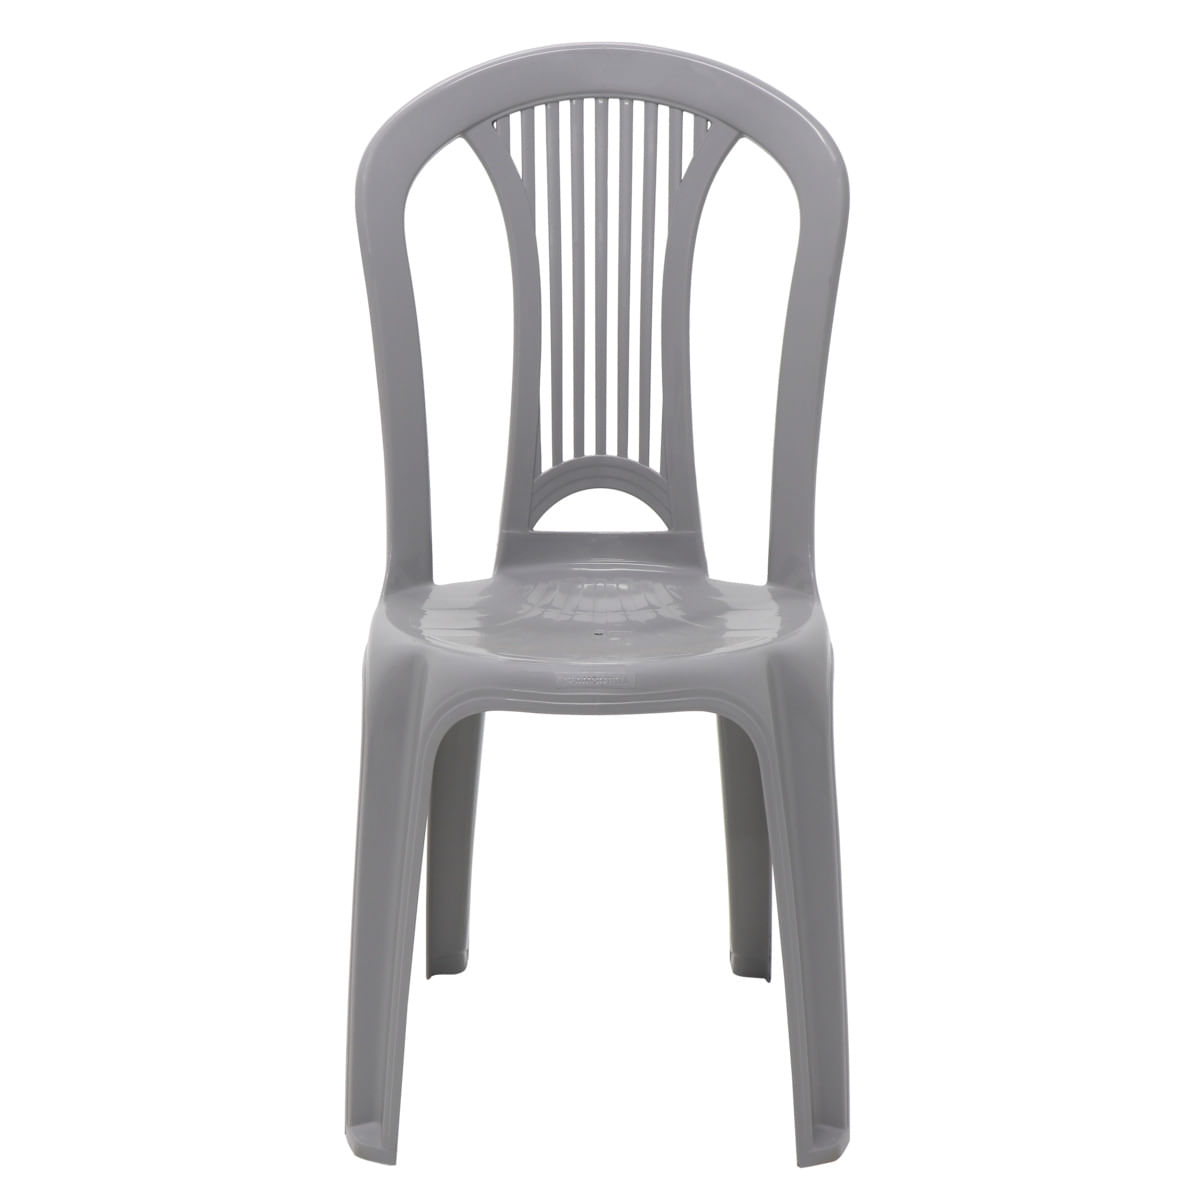 Conjunto de mesa com 4 cadeiras plásticas - Atlântida - Tambaú - Tramontina